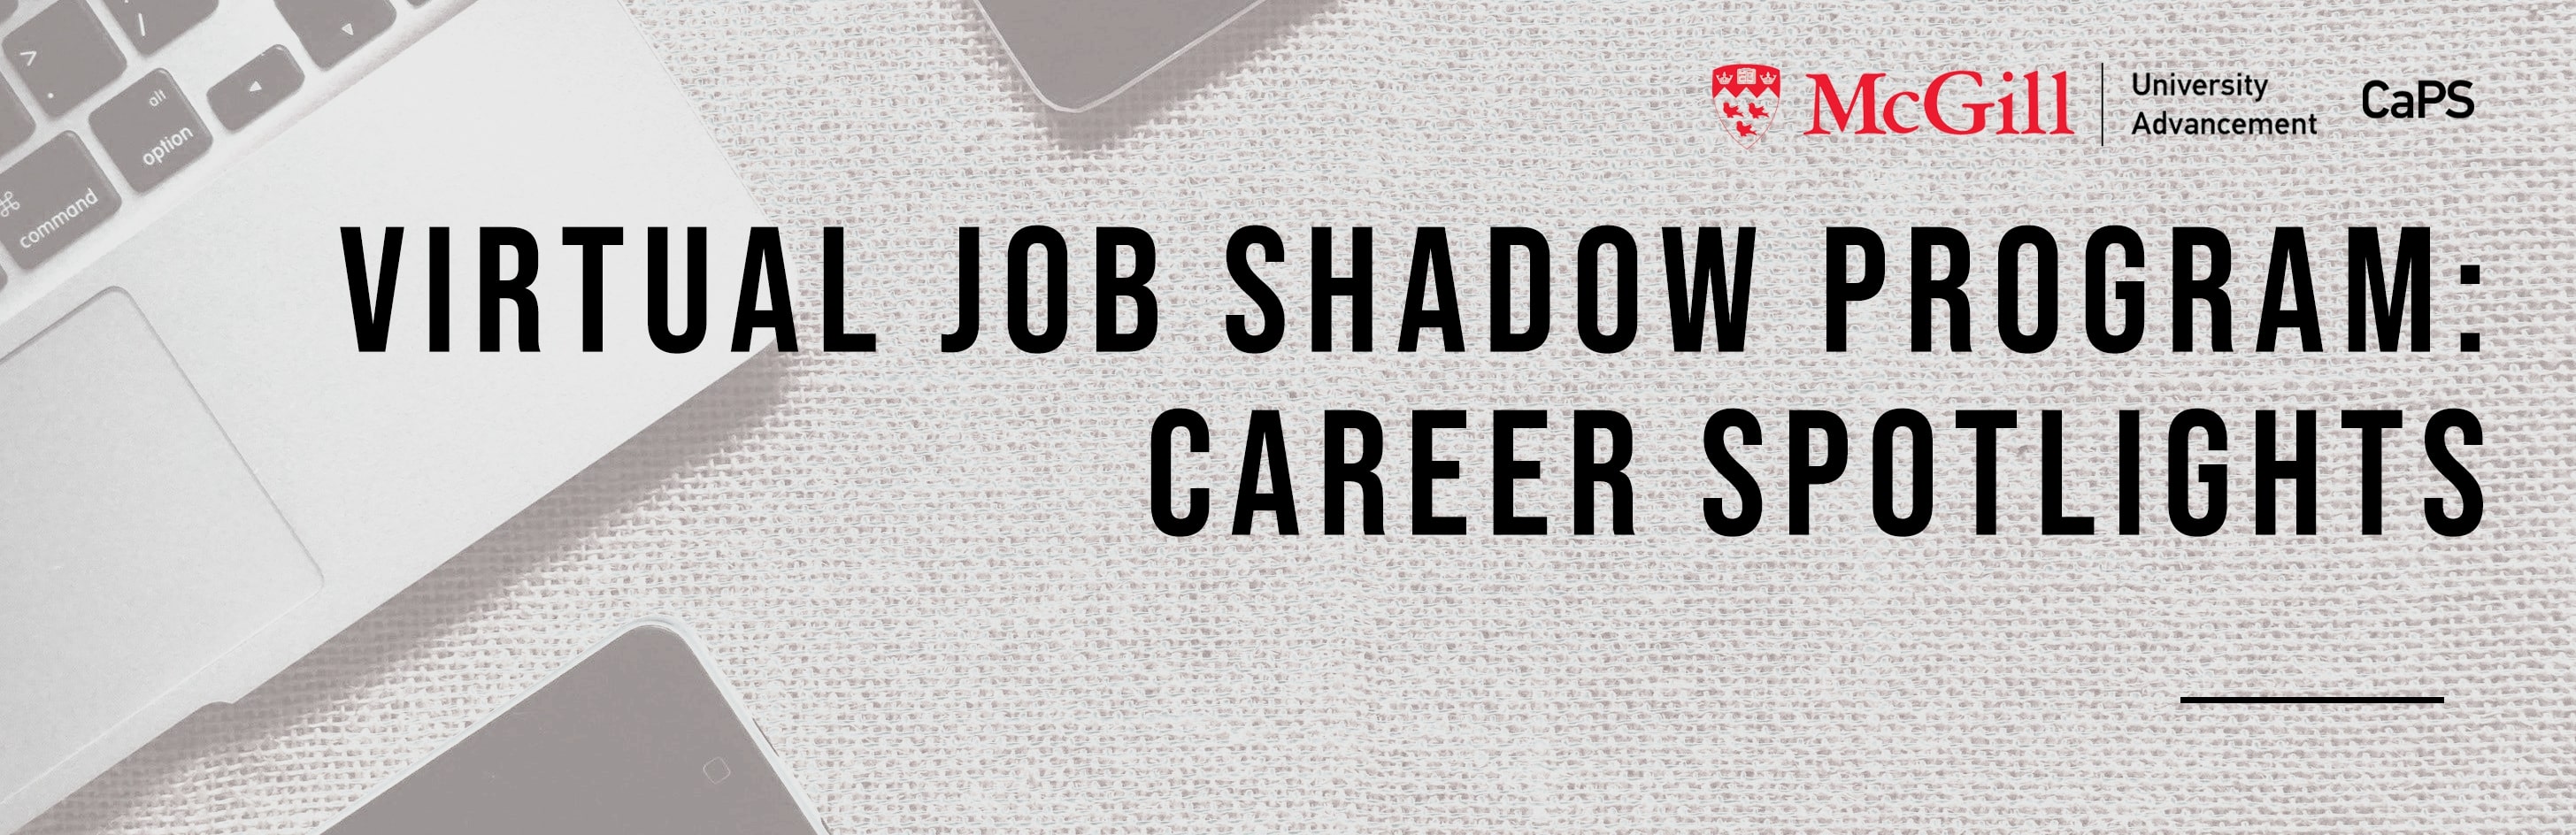 Job Shadowing Program Career Planning Service McGill University